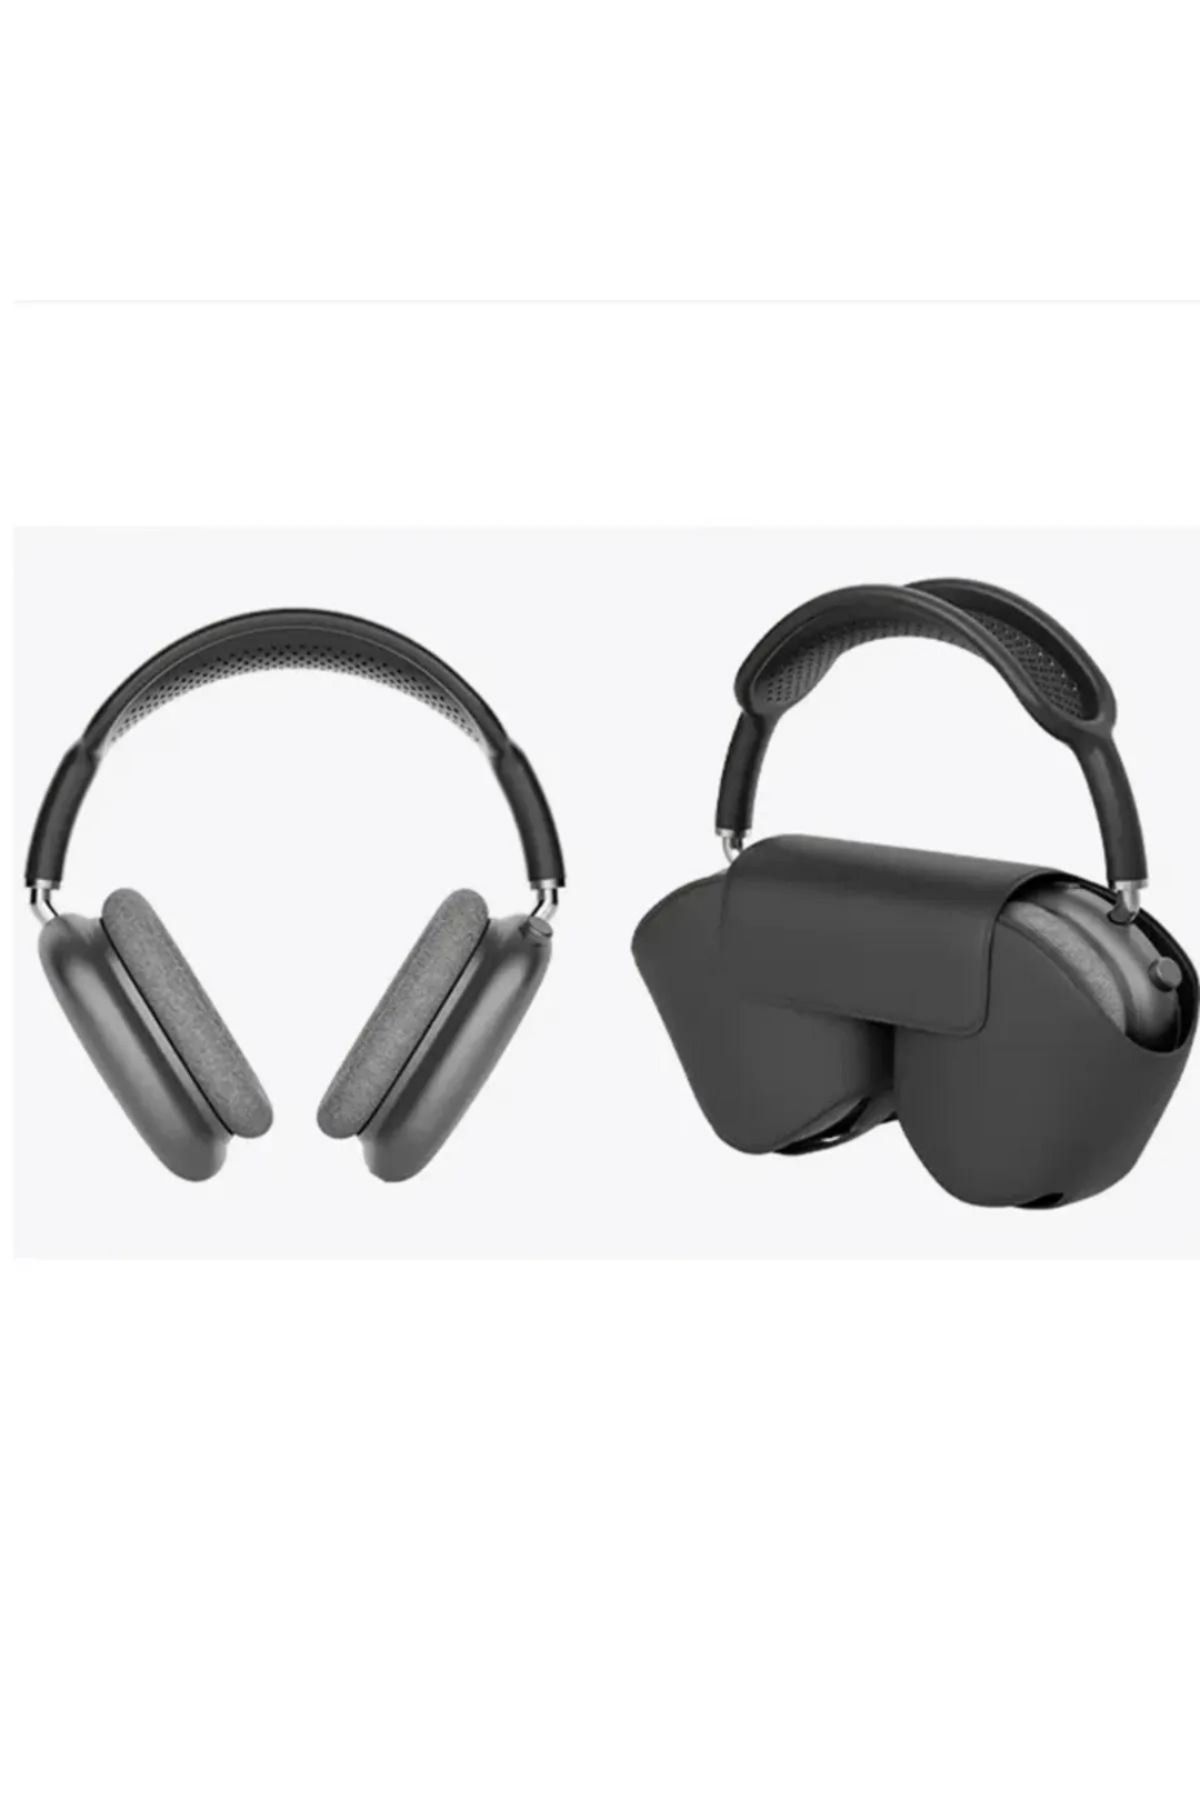 XİRA Bluetooth Kulaküstü Kulaklık Mükkemel Kalite Yüksek Bass Buffer X-MAKS